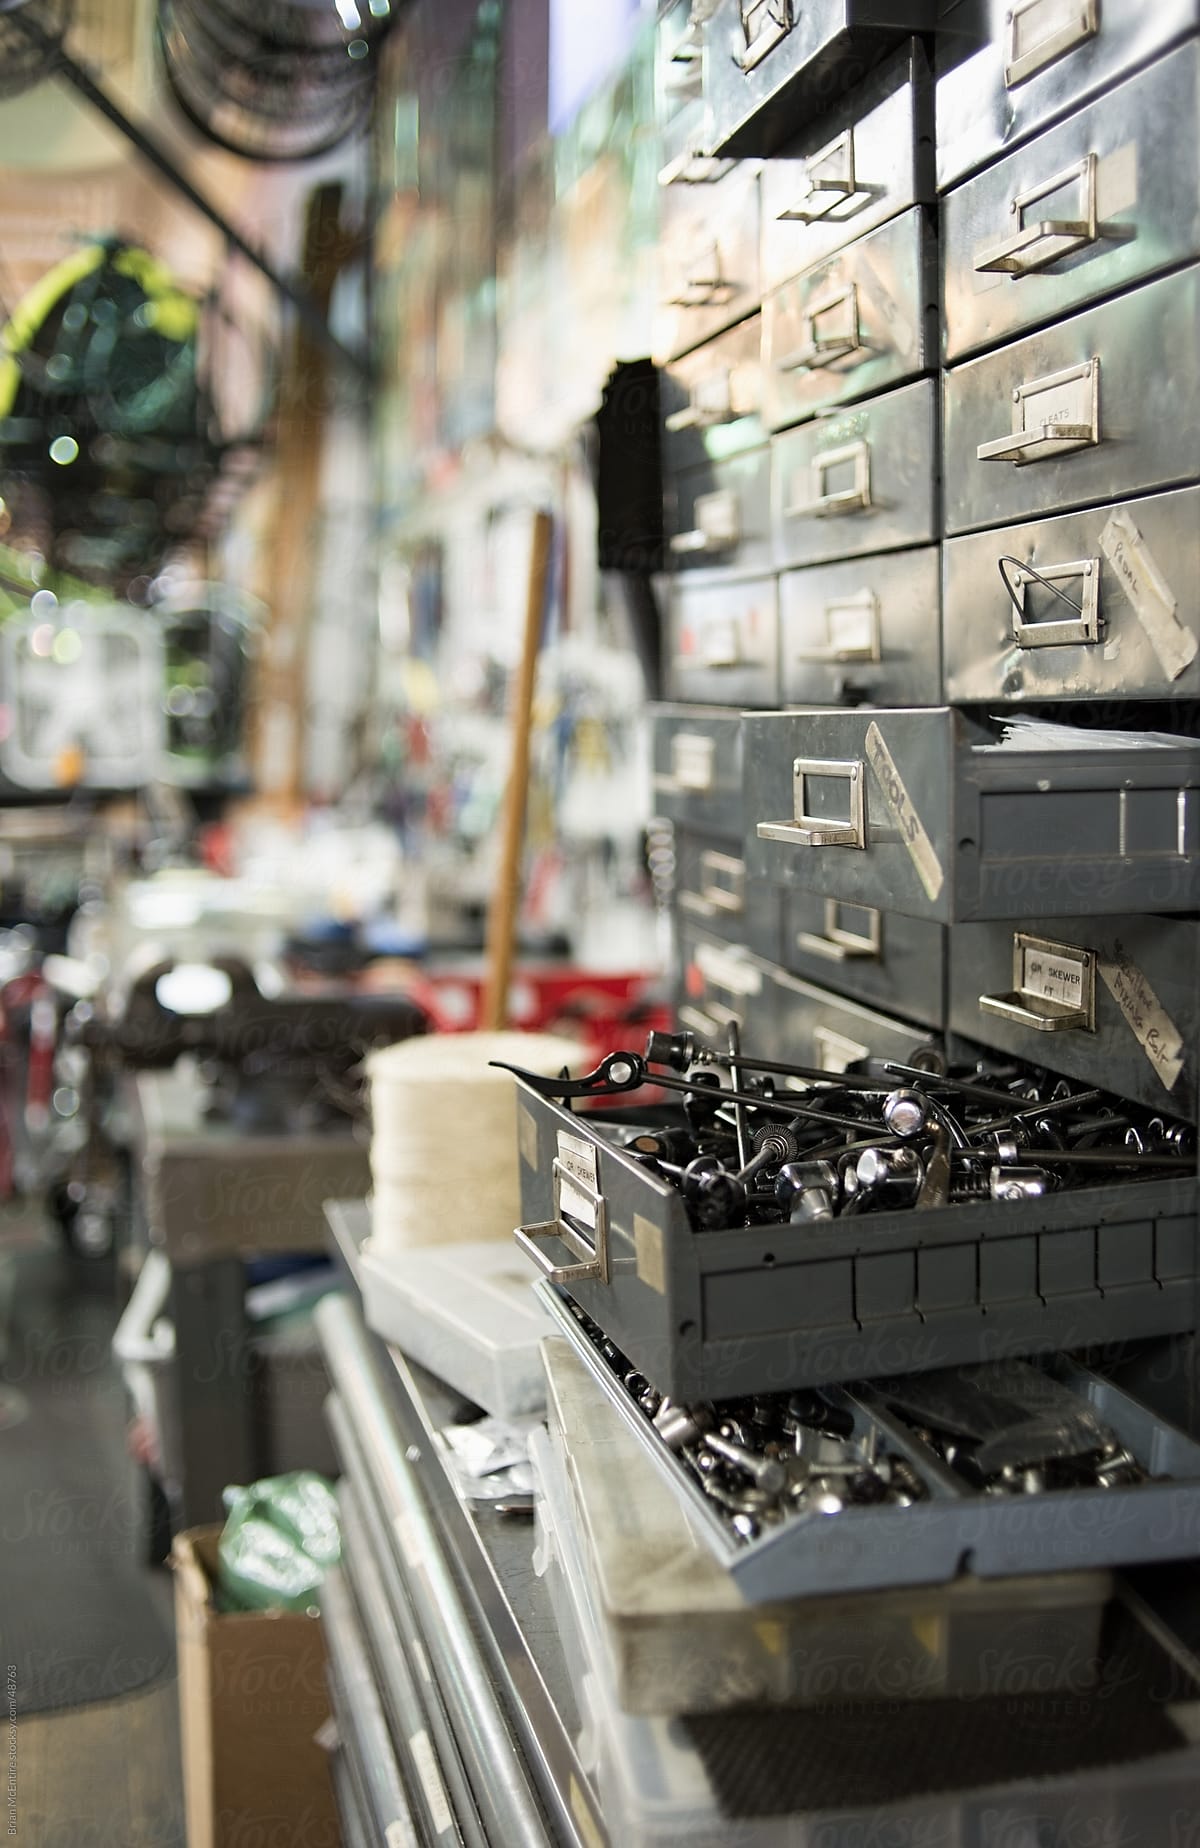 Local Bike Shop: Metal Drawer Full of Bicycle Parts